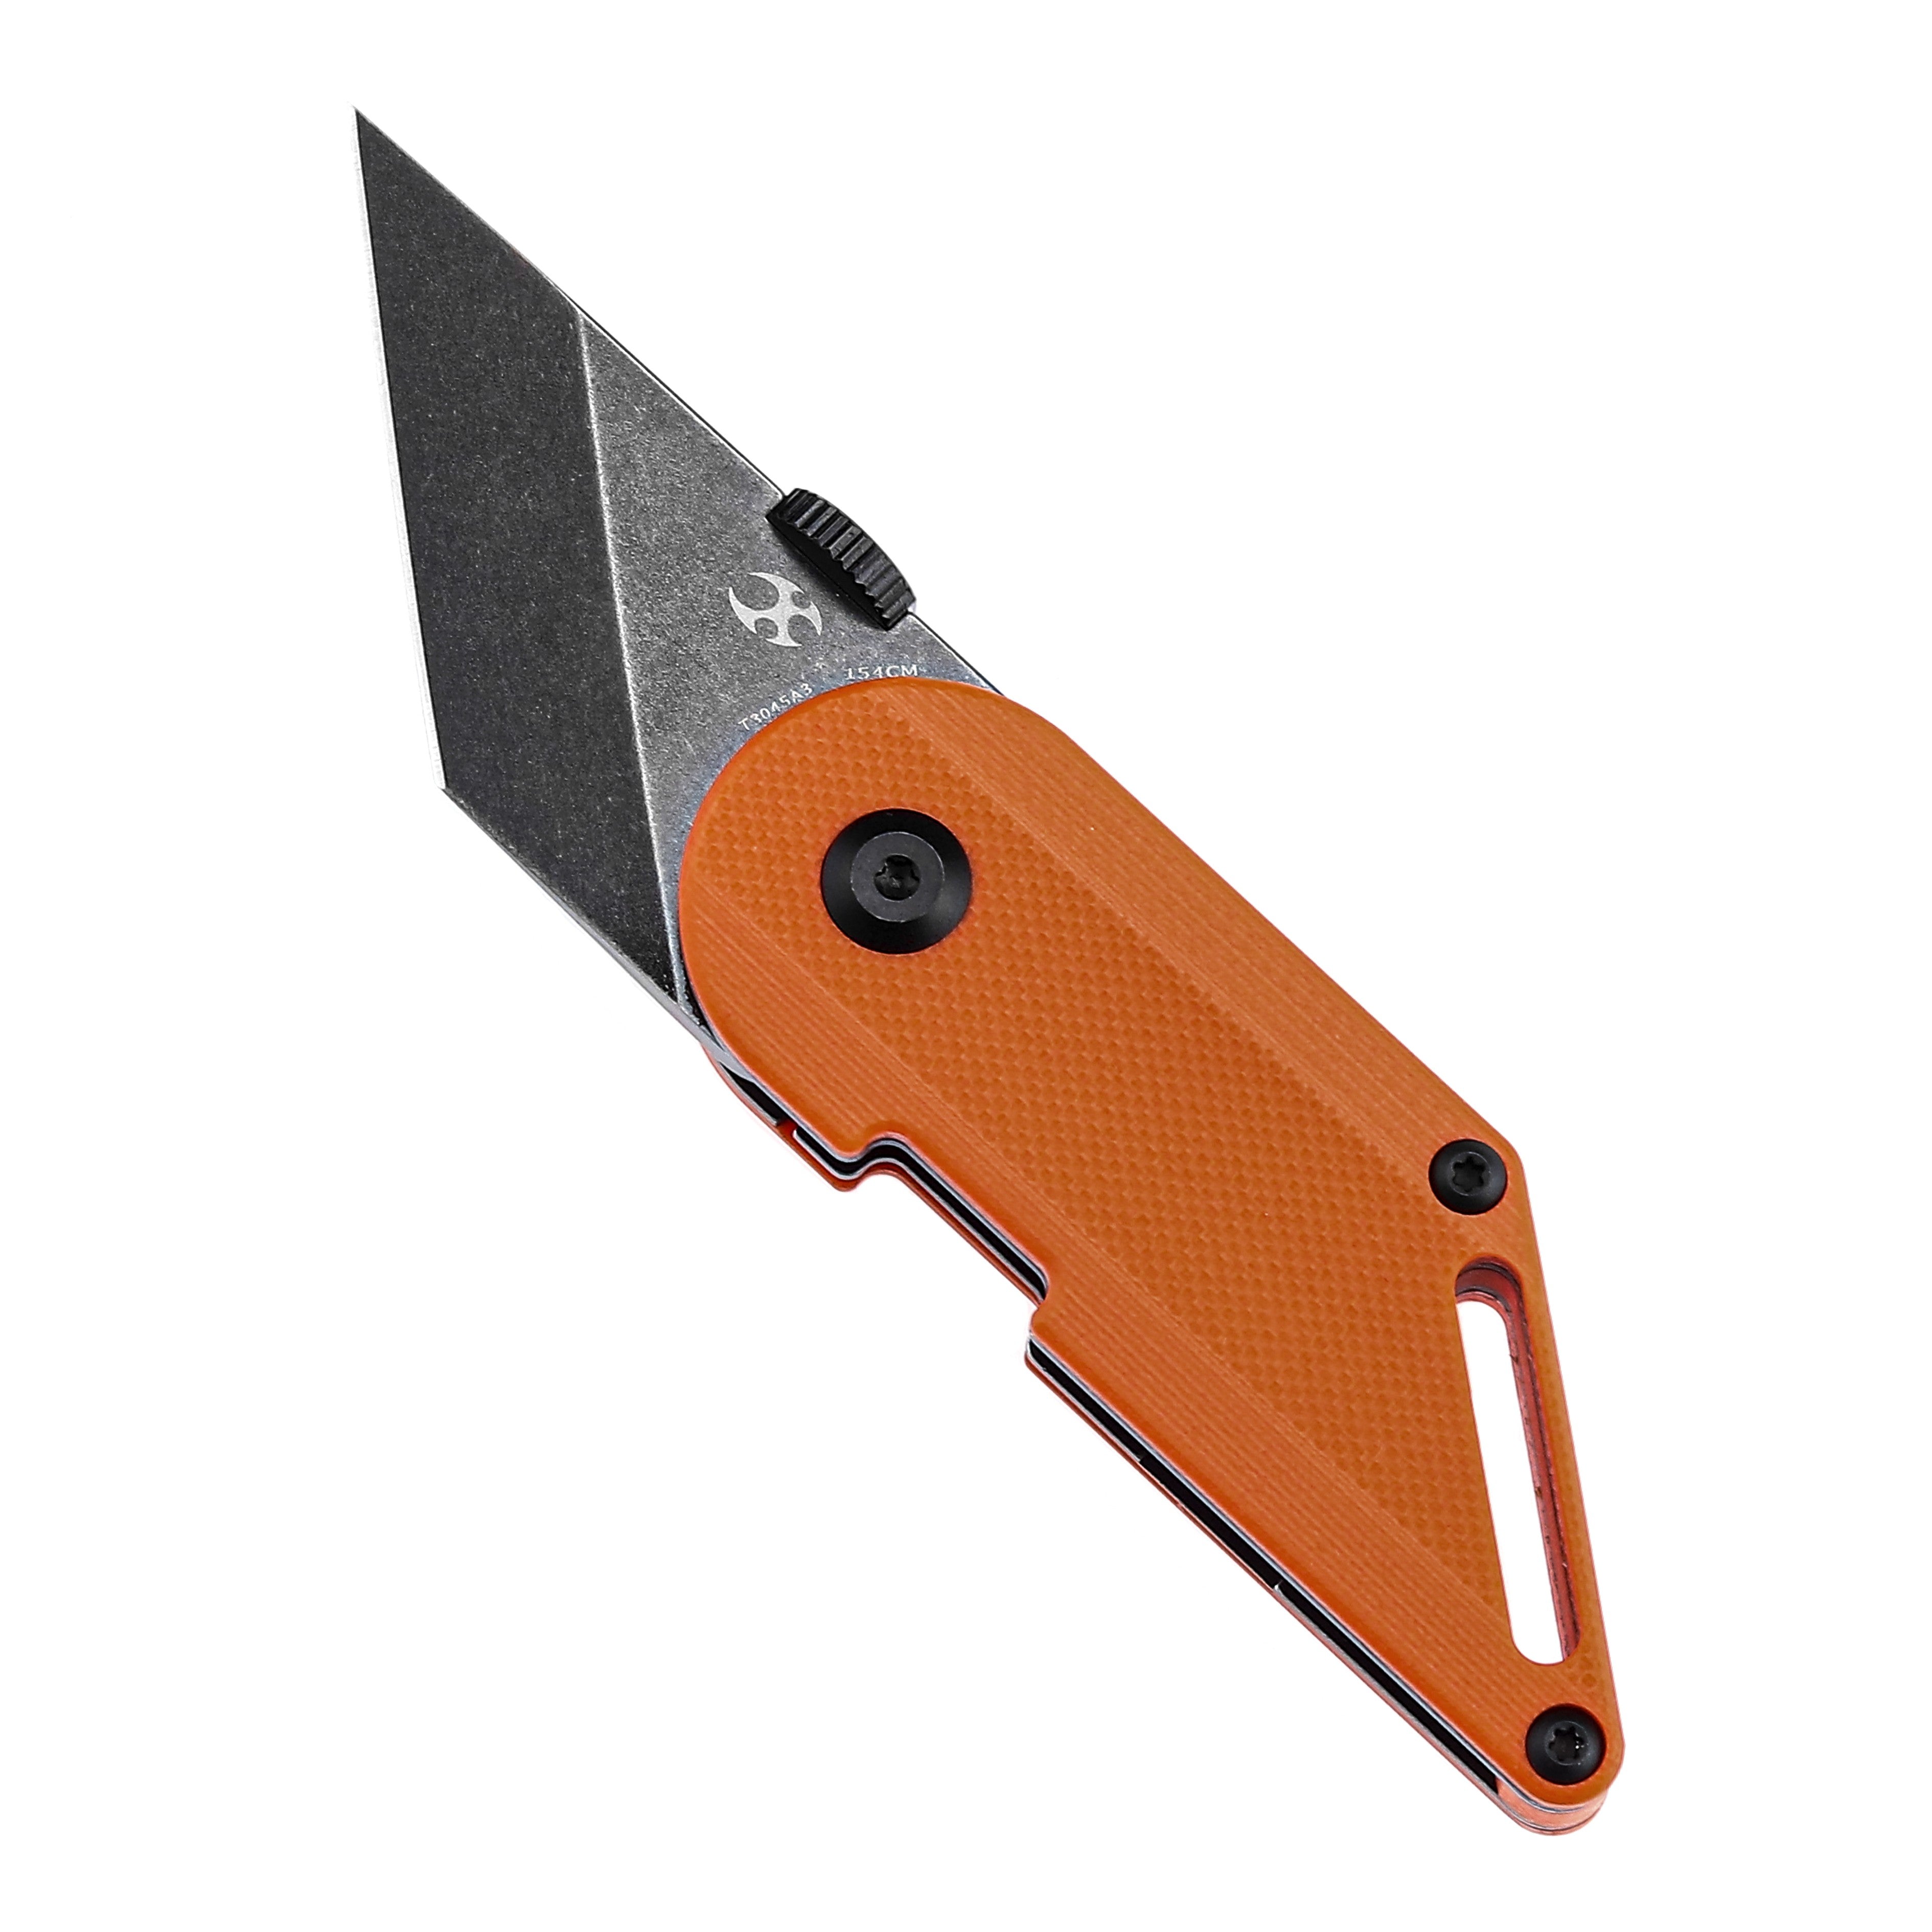 Kansept 刀具 Dash T3045A3 154CM 刀片橙色 G10 内衬锁 Edc 刀具